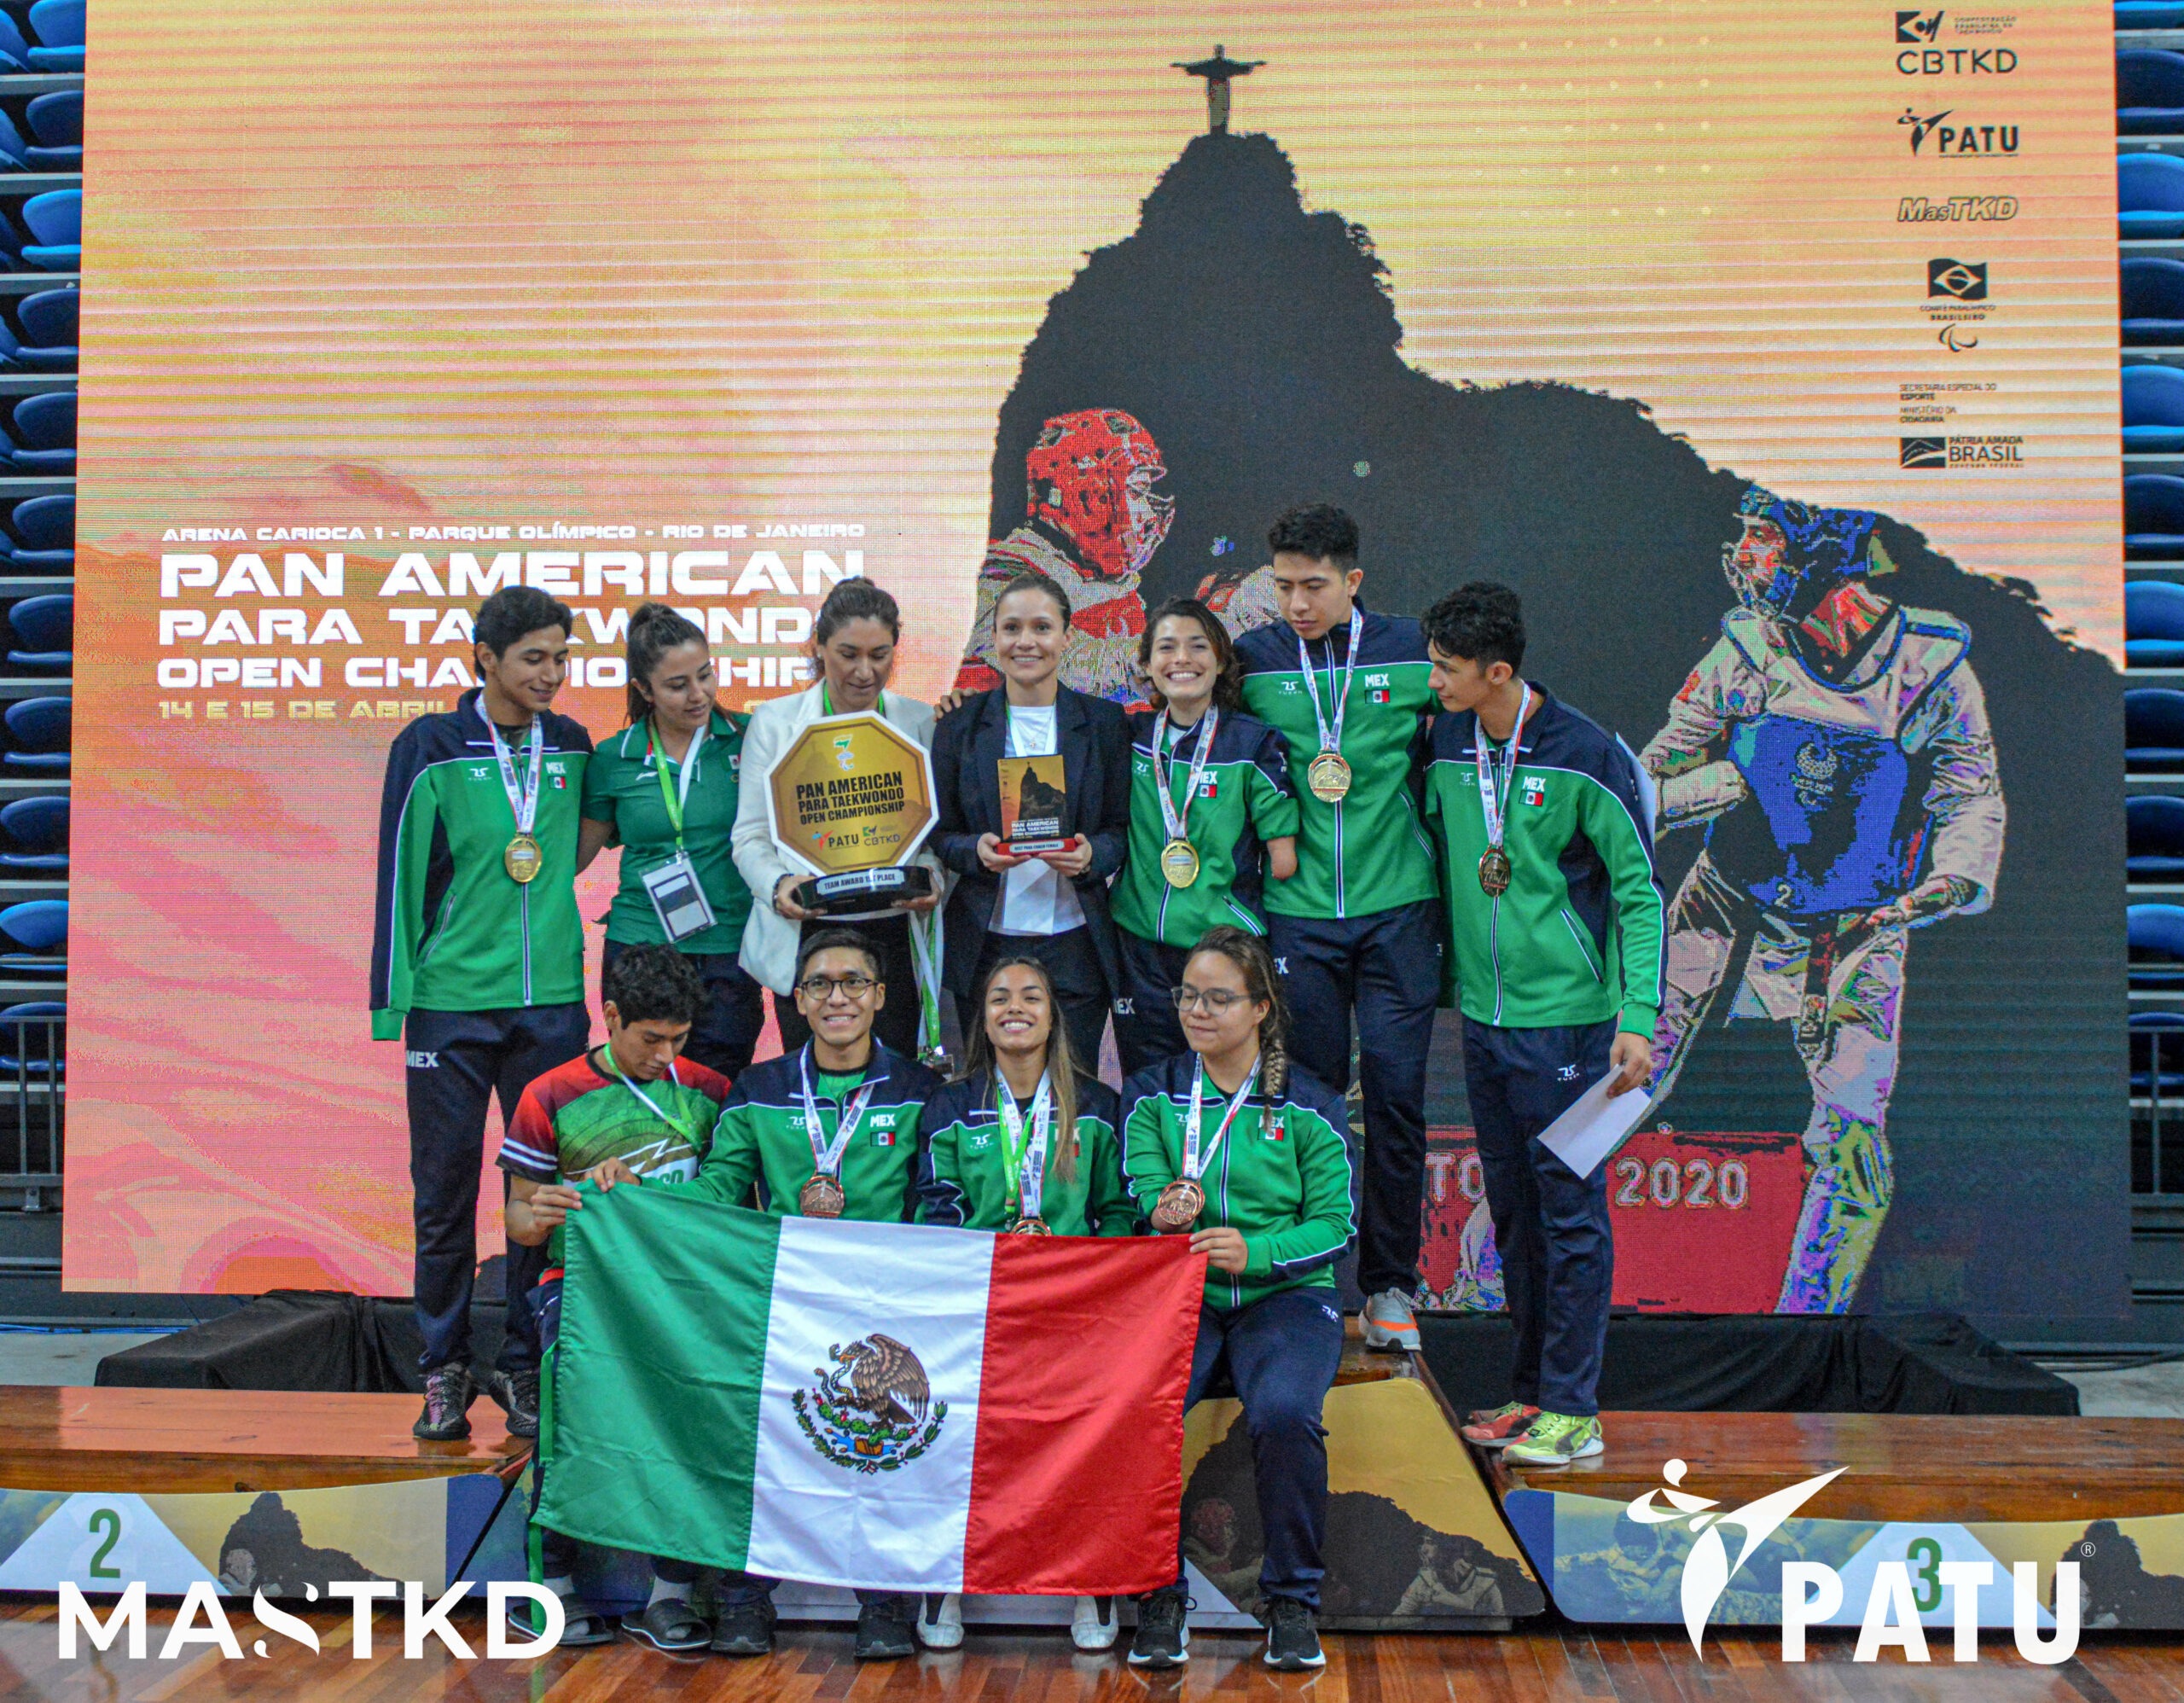 Pan American Para Taekwondo Open Championships